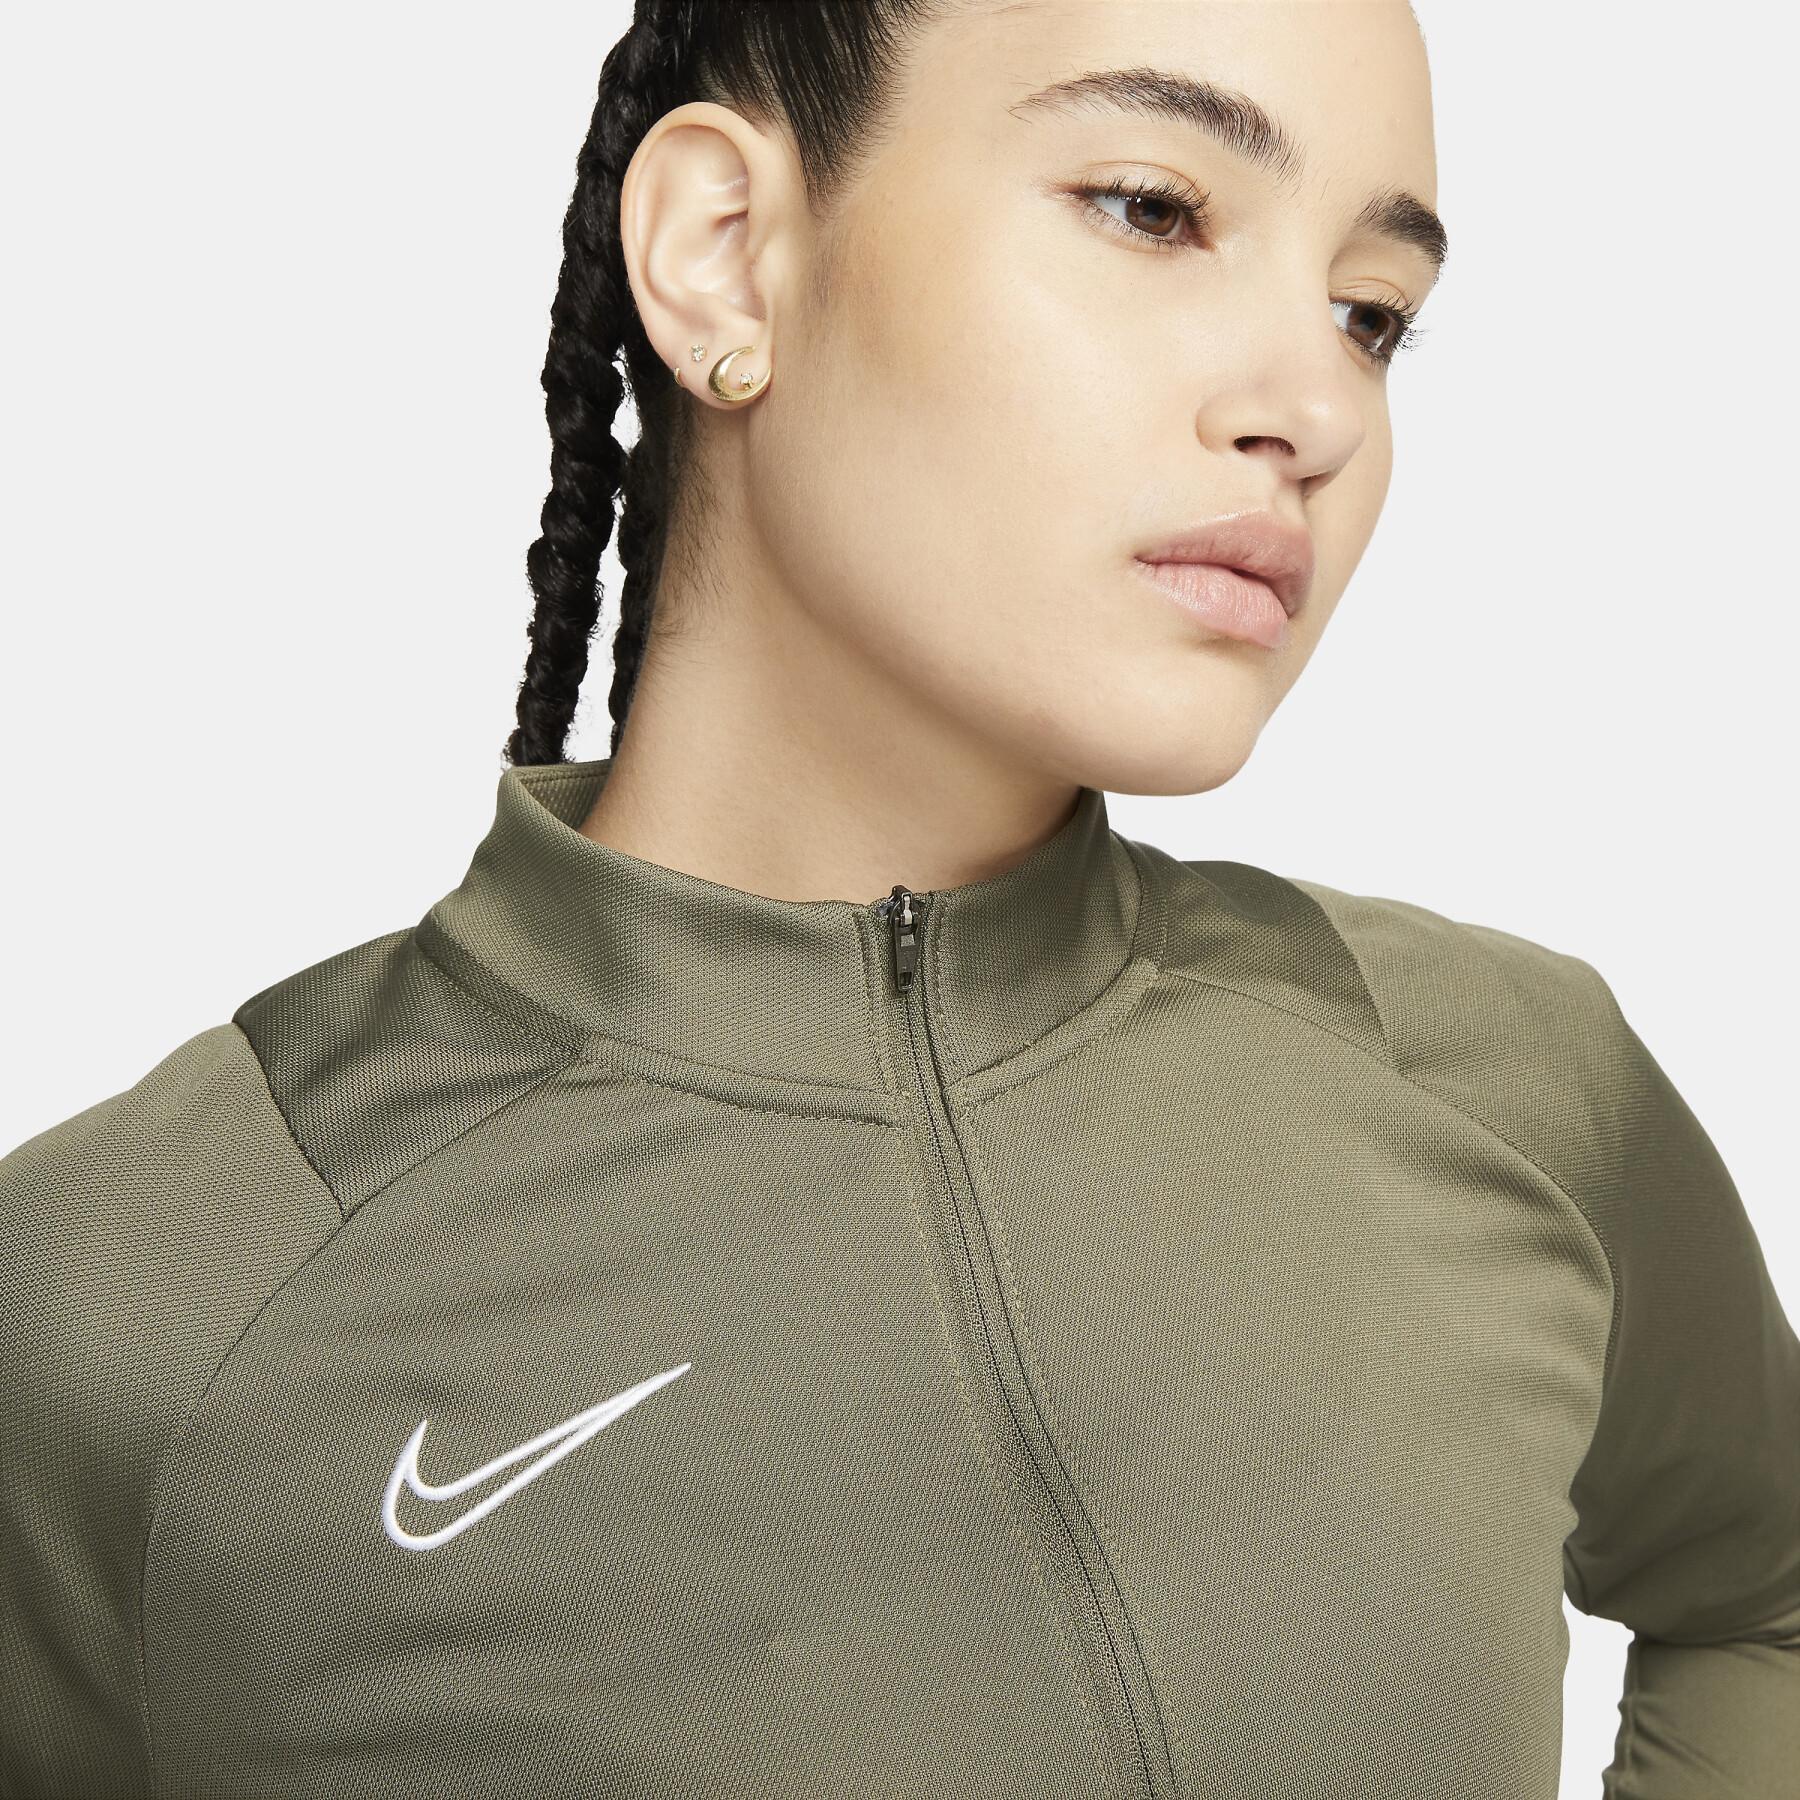 Survêtement femme Nike Academy K